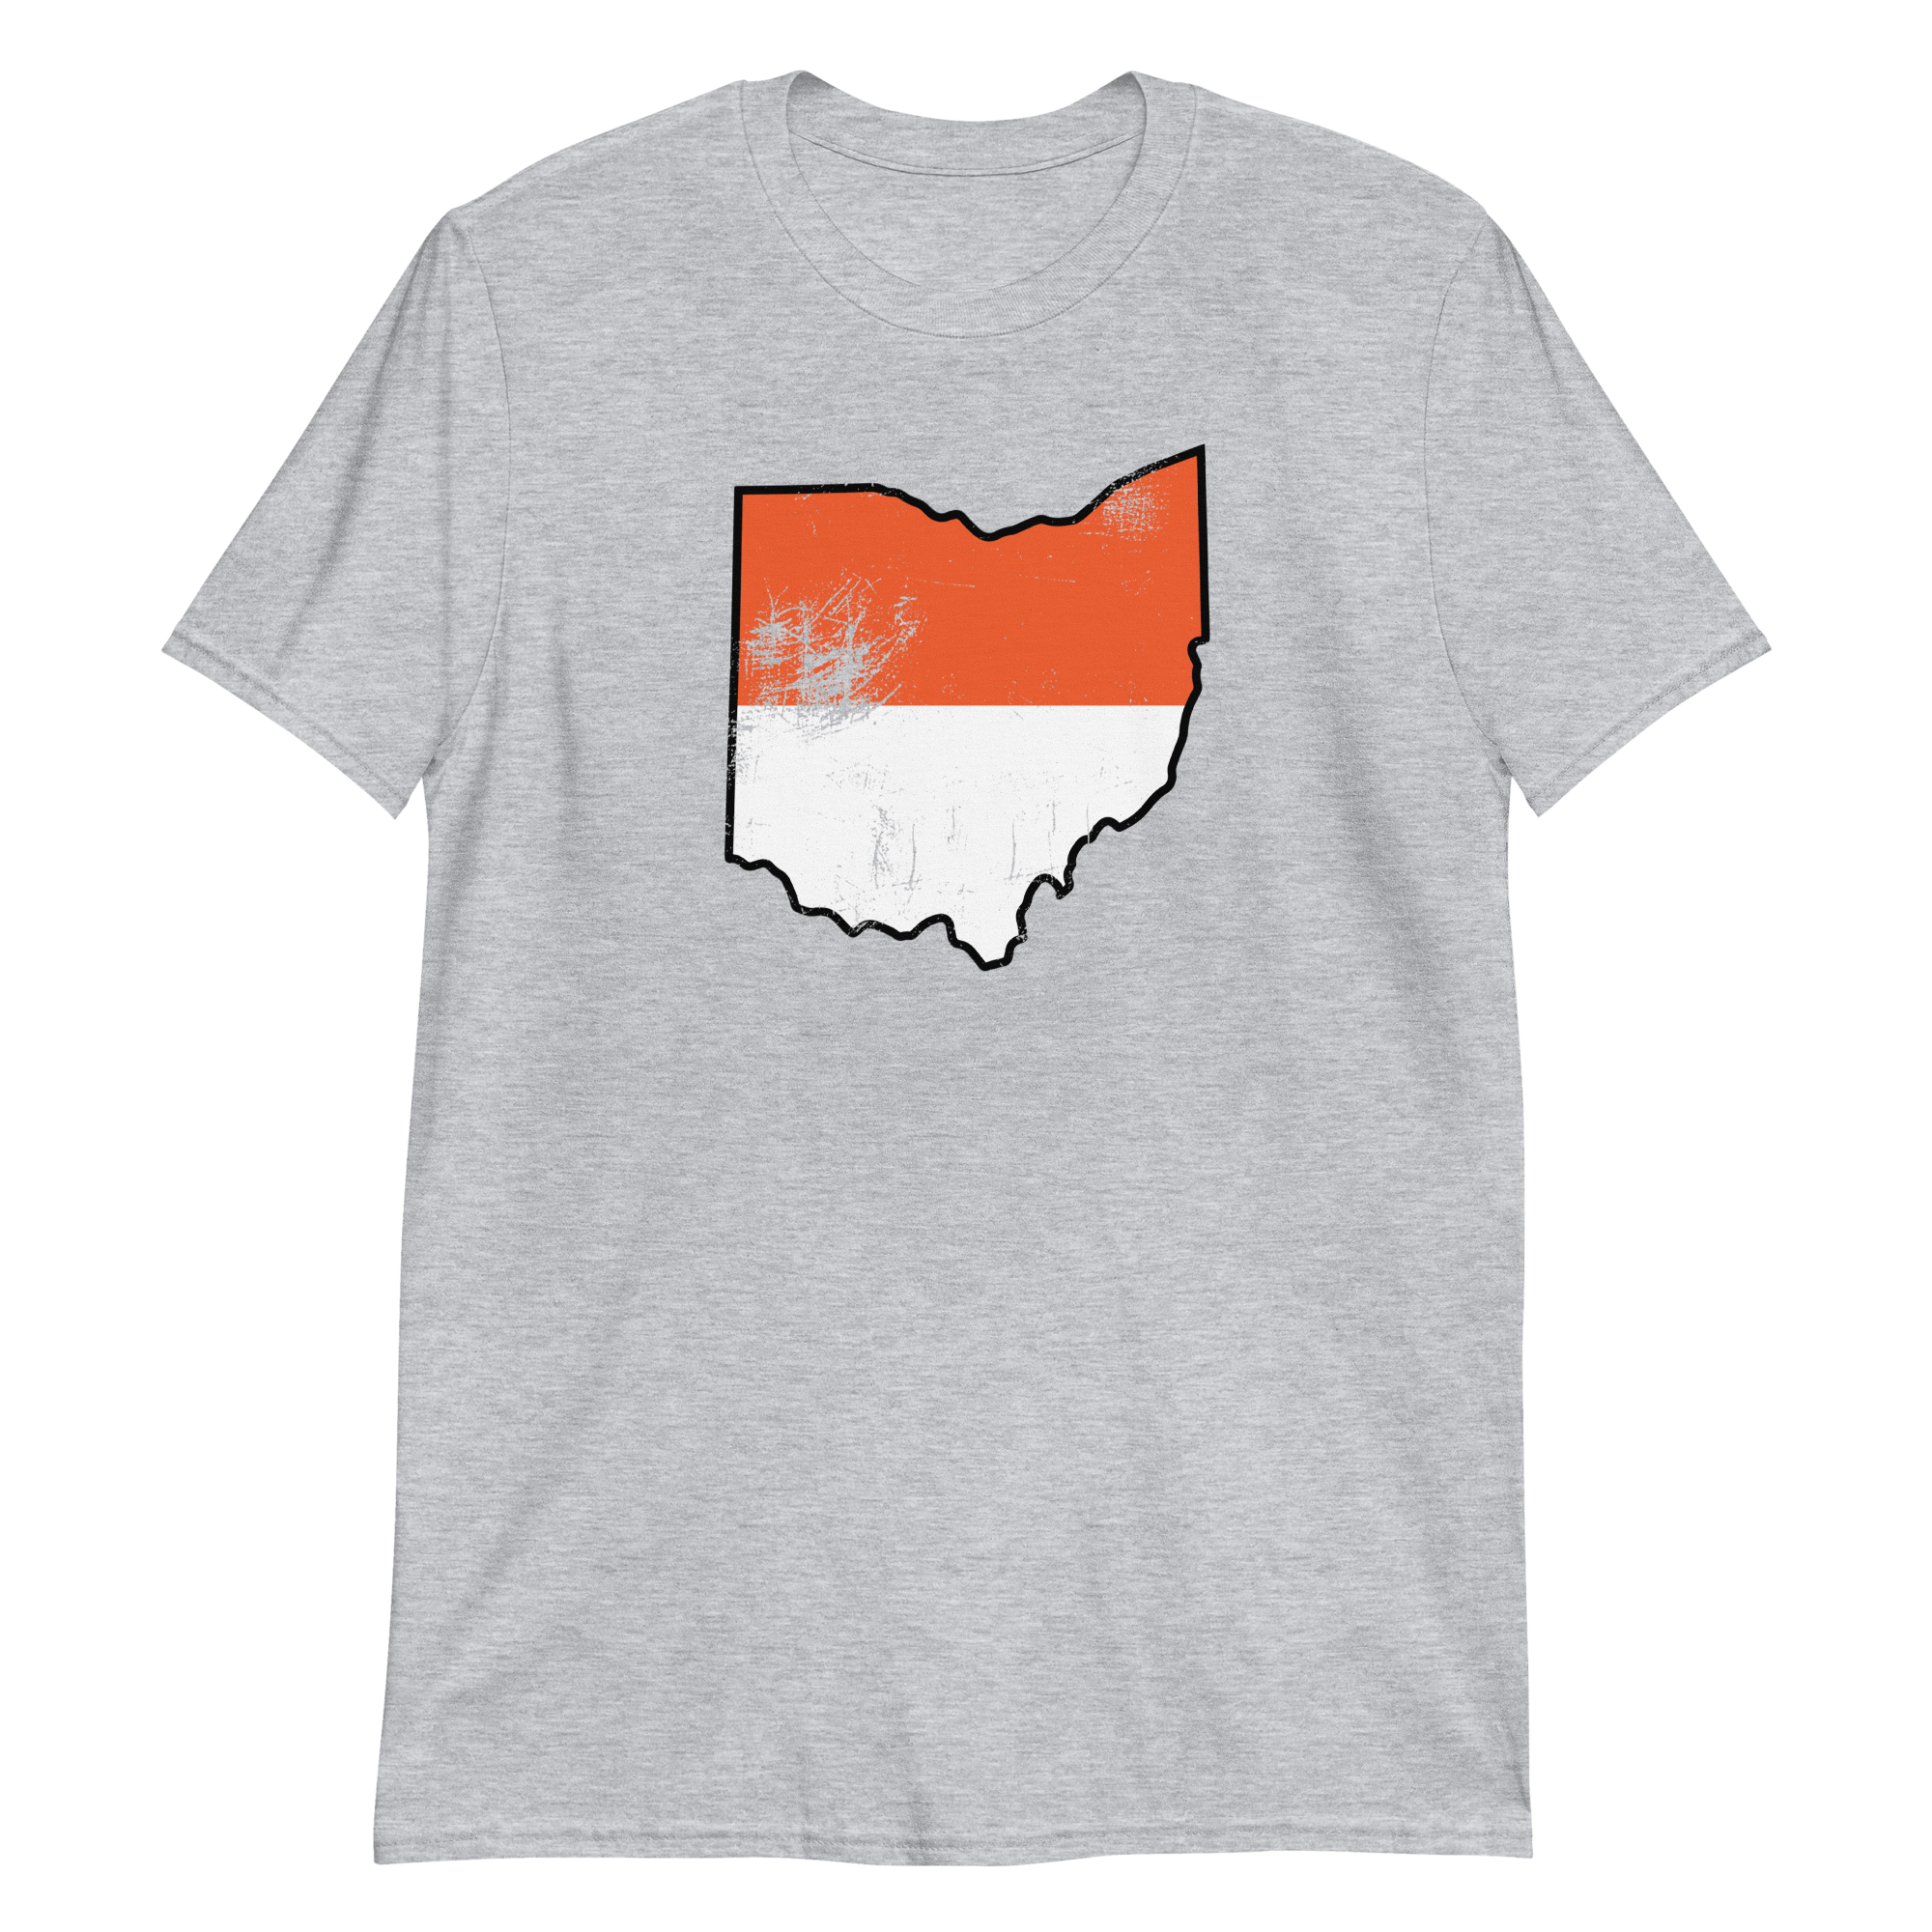 Ohio Split Orange & White